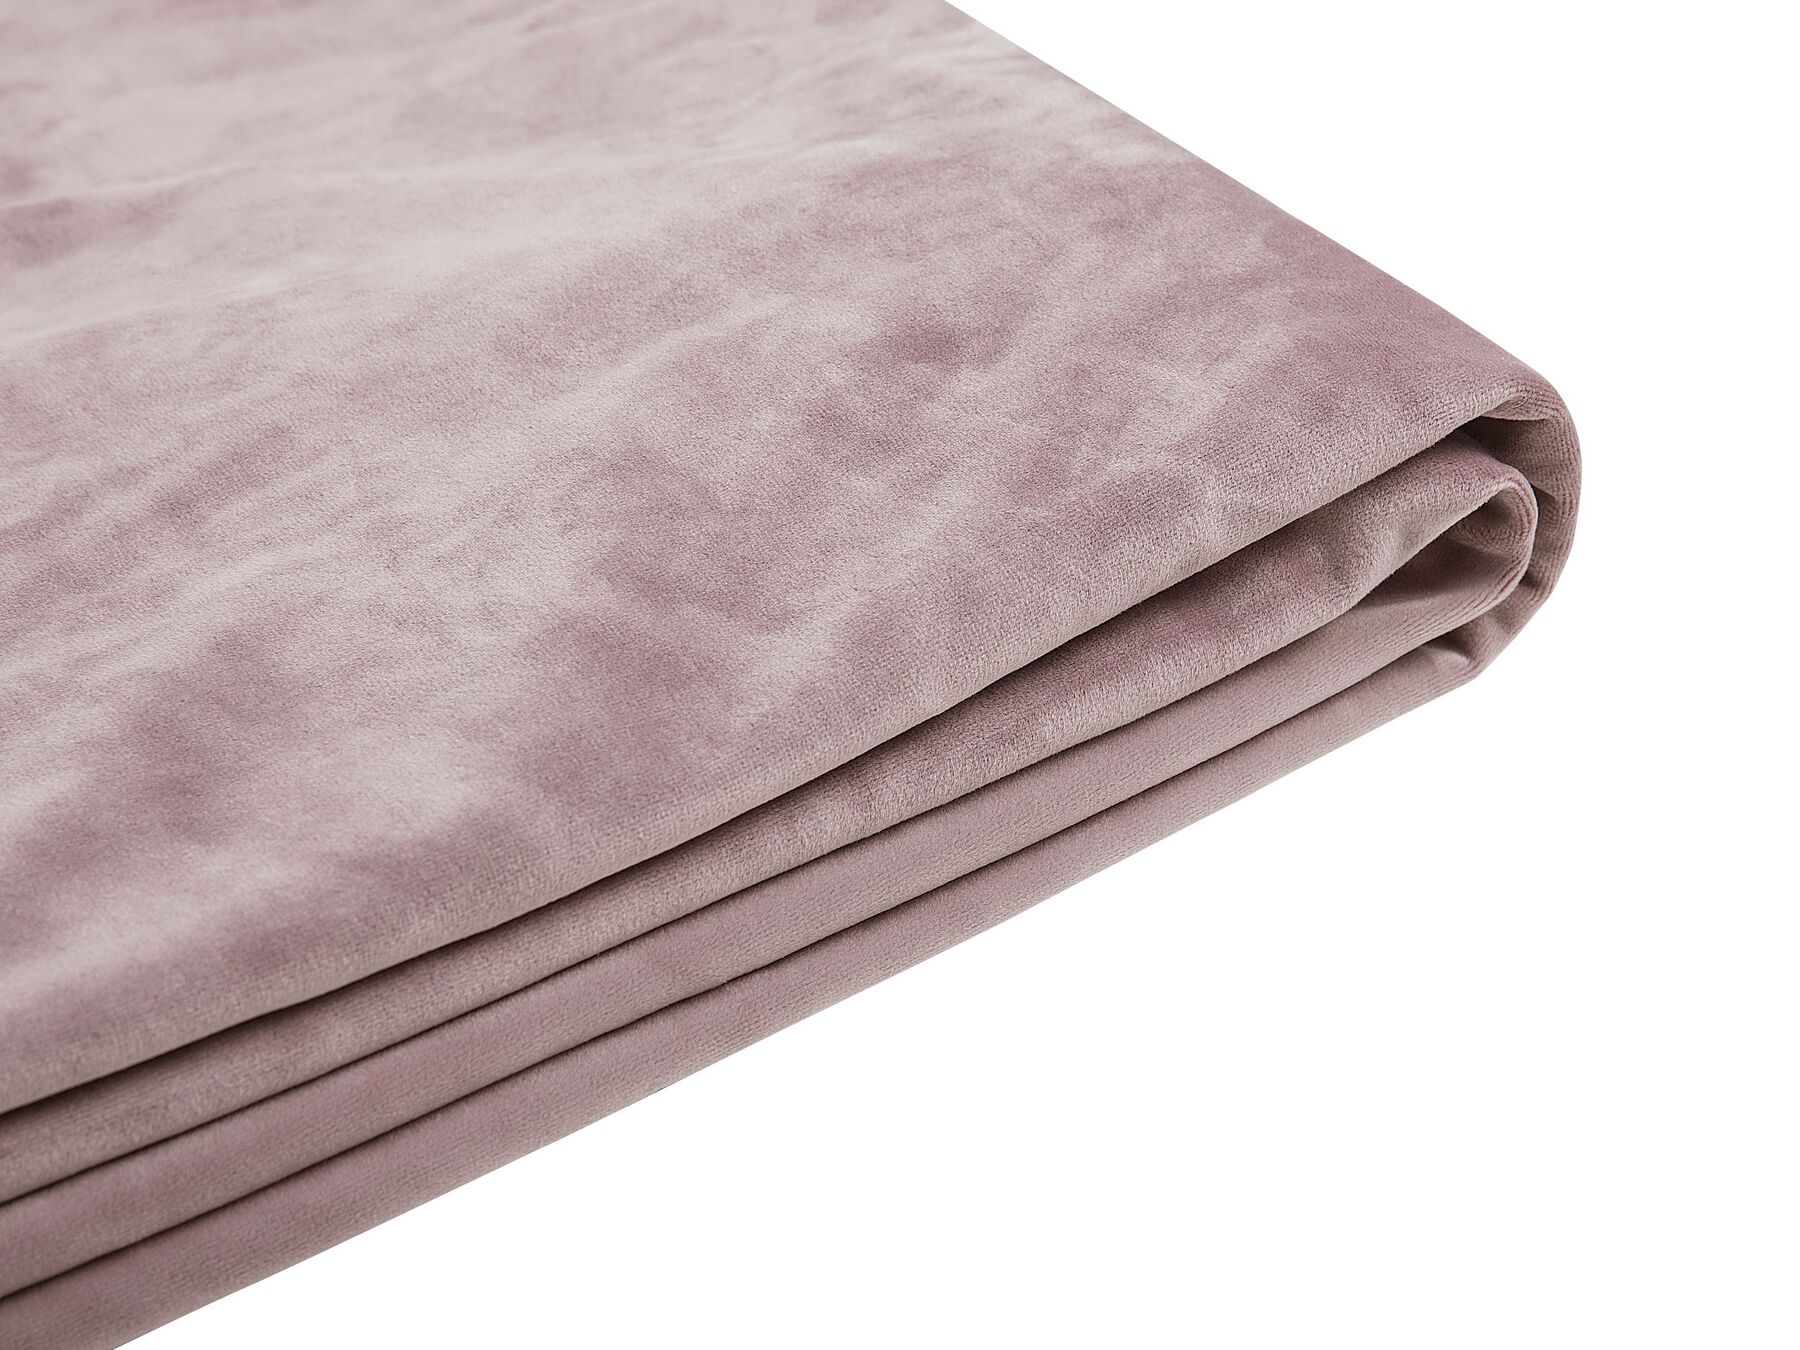 Bekleding fluweel roze 160 x 200 cm voor bed FITOU _748726